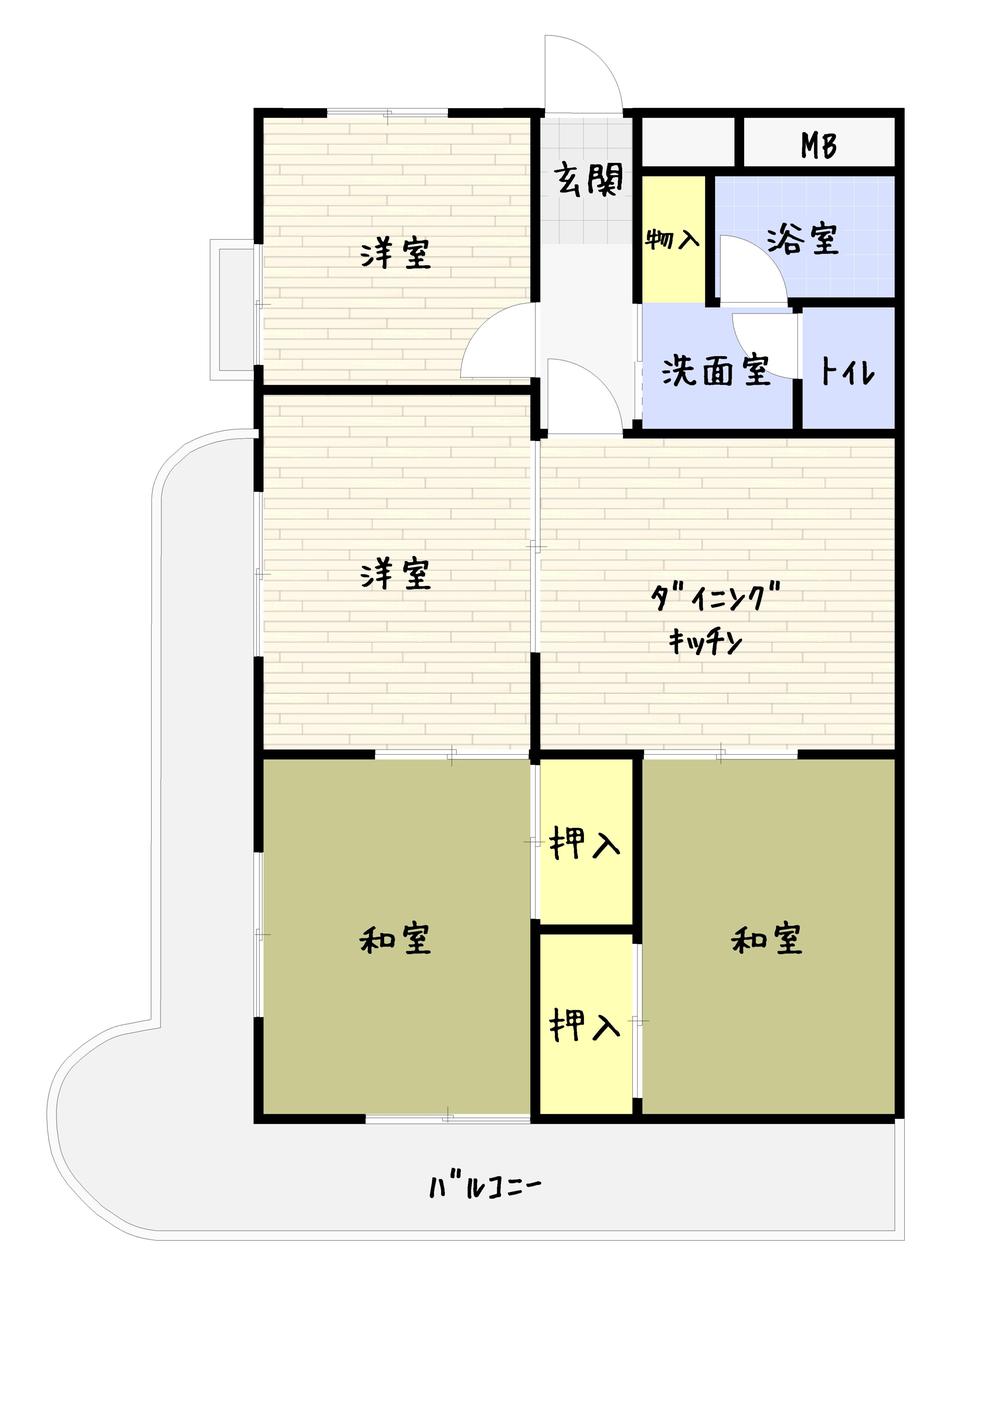 Floor plan. 4DK, Price 6.8 million yen, 4DK private garden with the occupied area 59.73 sq m south!